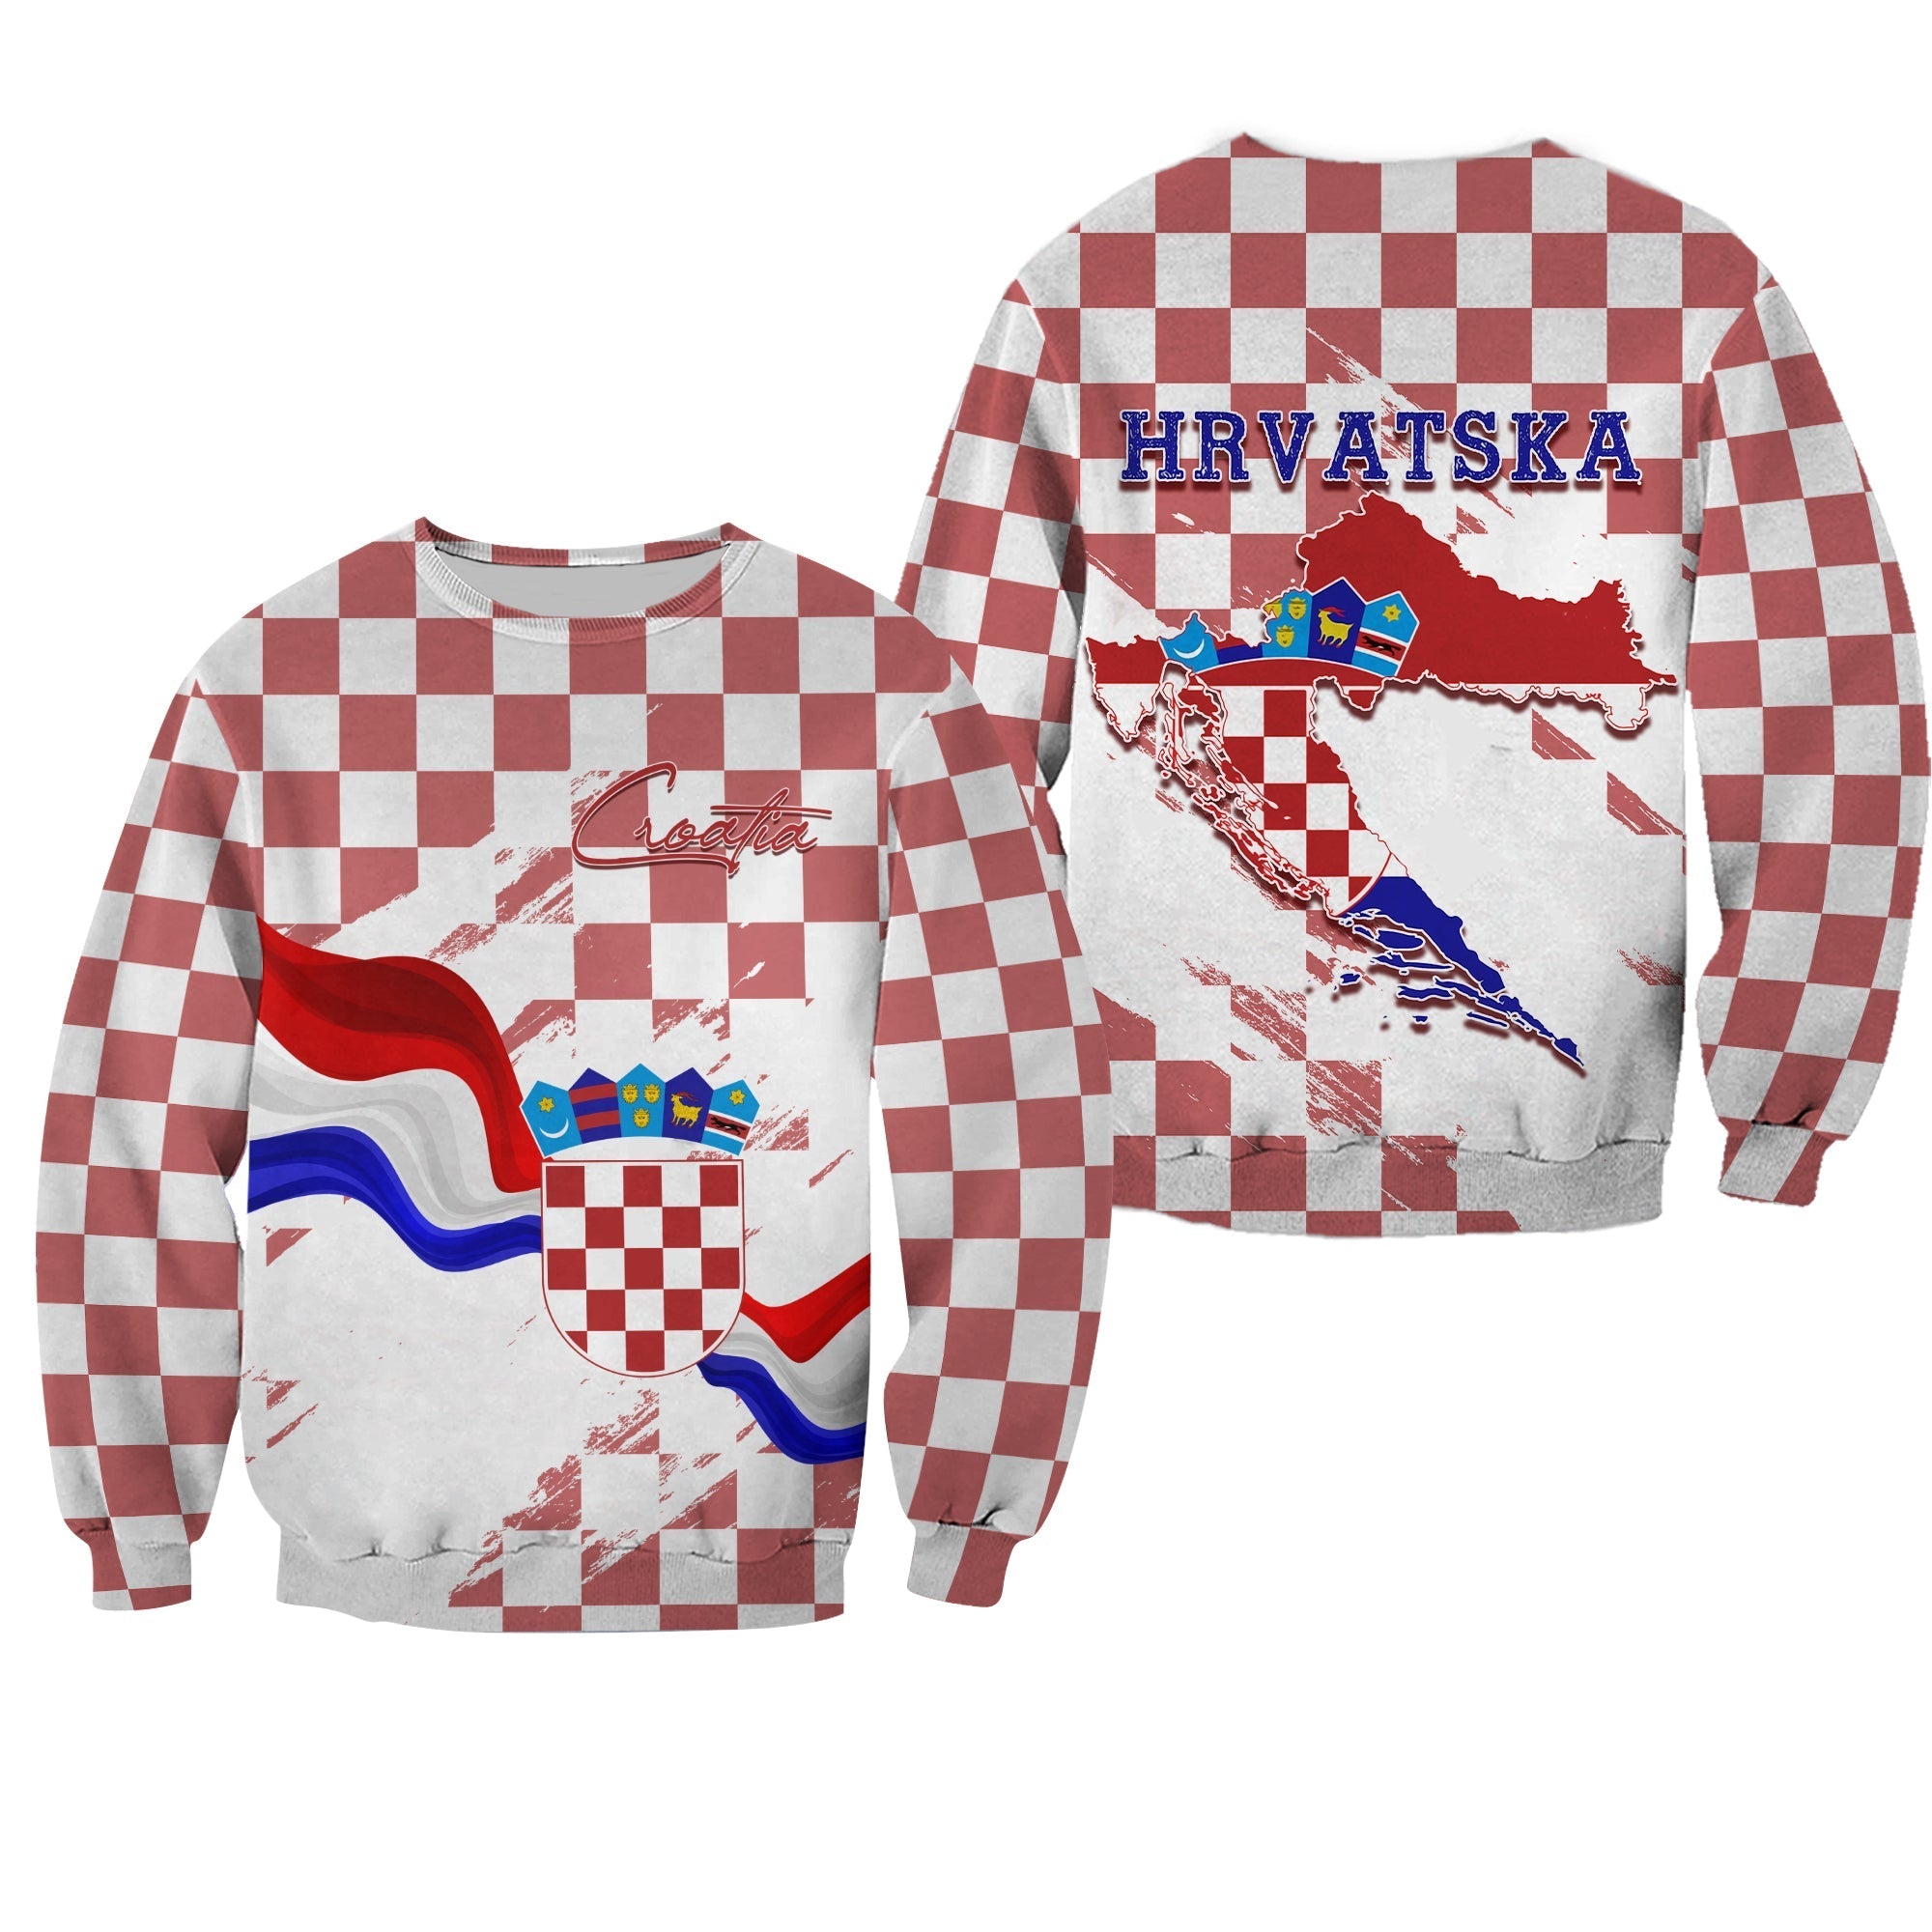 croatia-sweatshirt-checkerboard-grunge-style